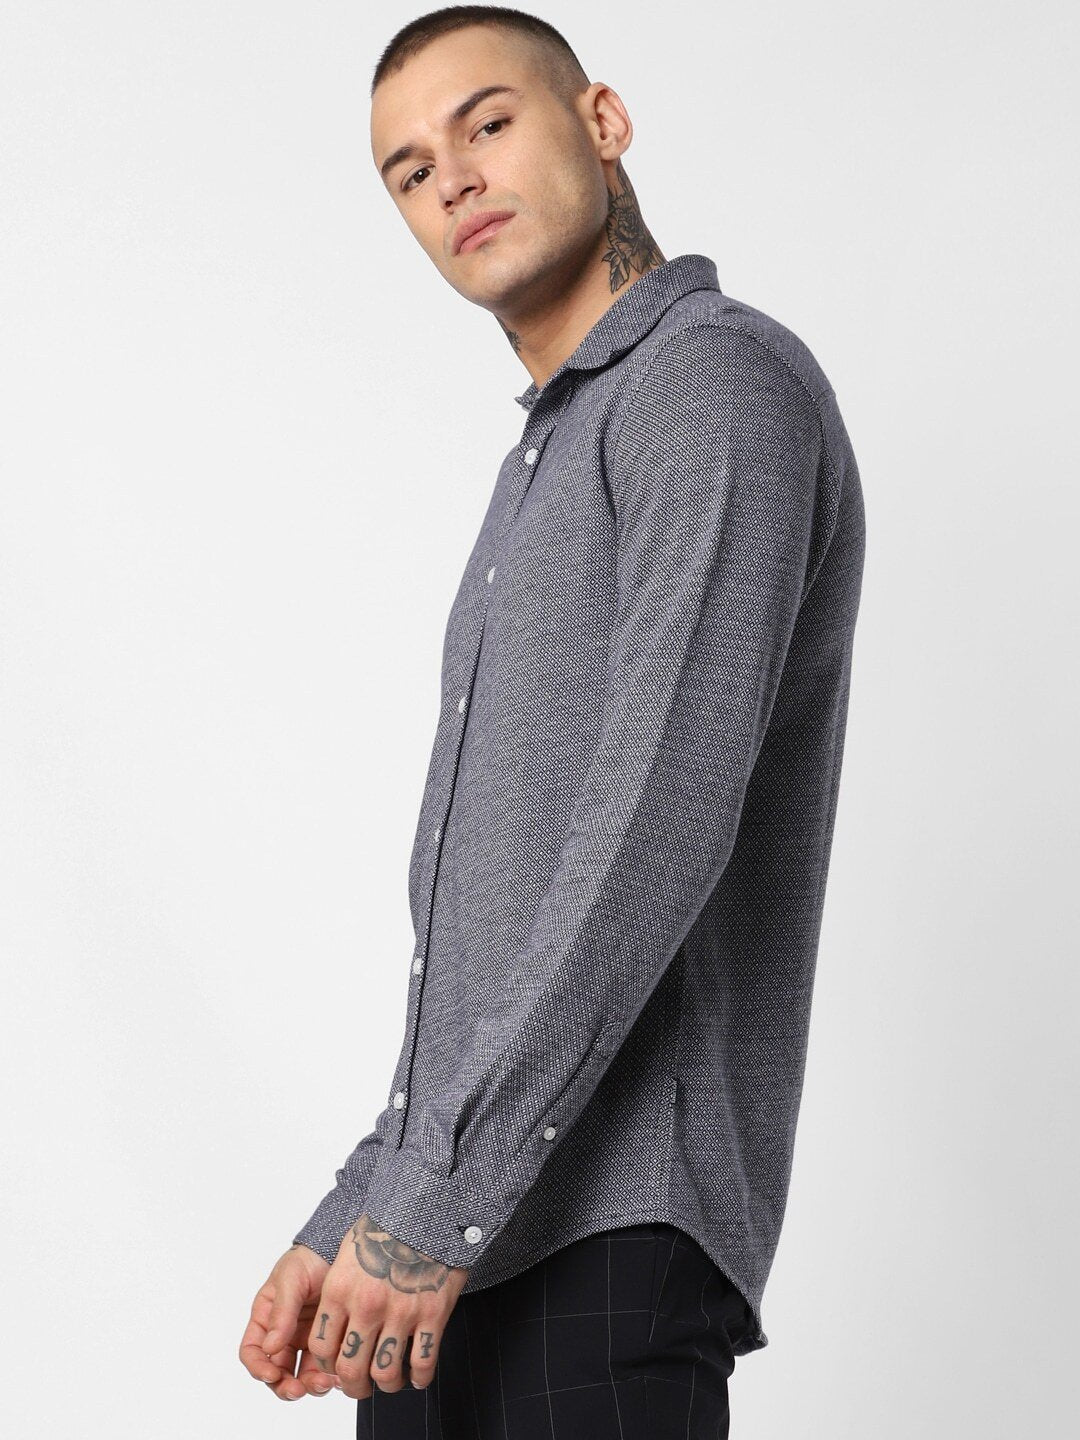 Men Navy Blue & White Slim Fit Self Design Casual Shirt-2080059002 - Discount Store